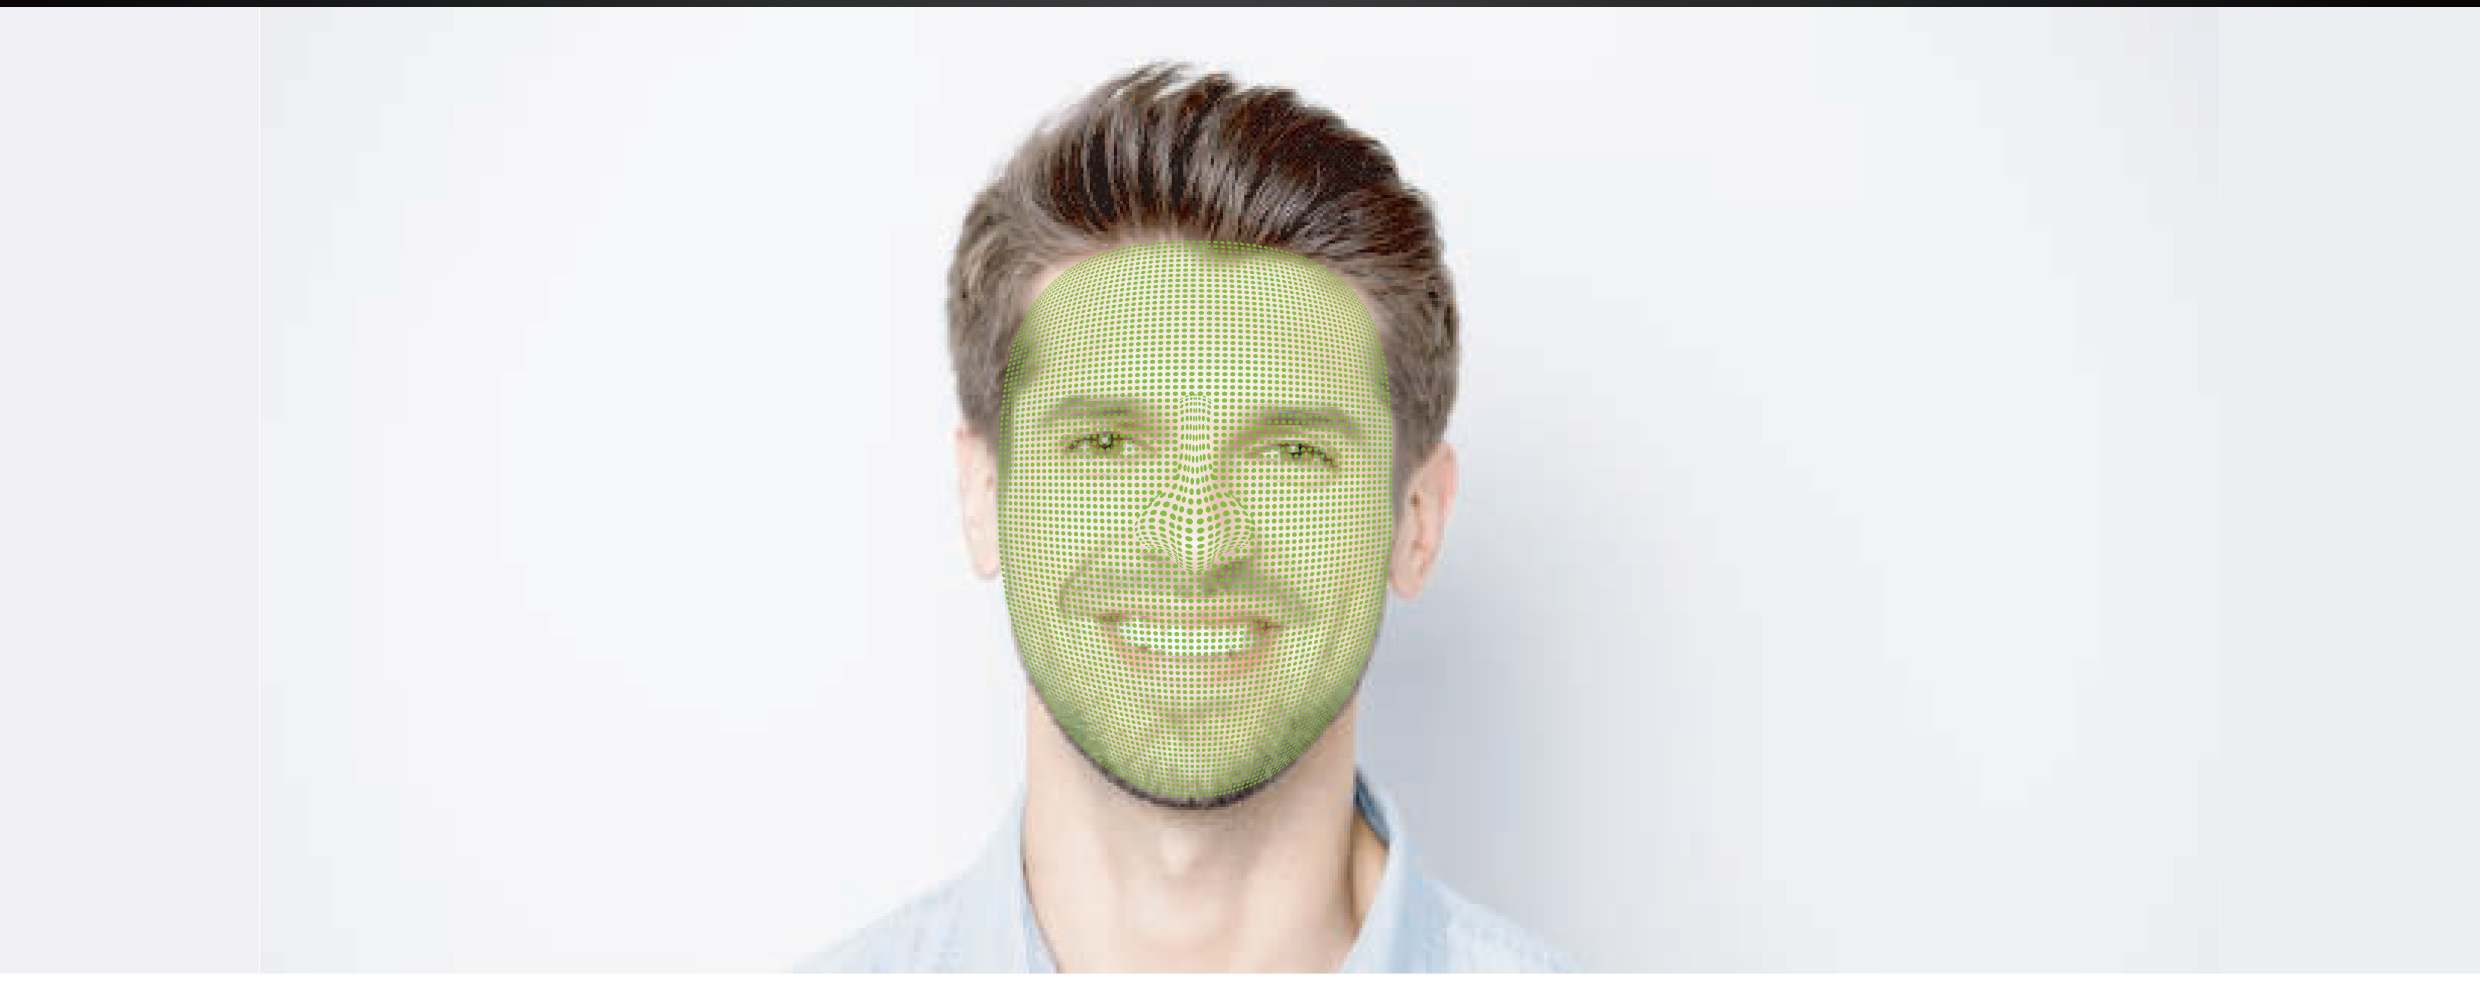 3D構造化光顔認証技術